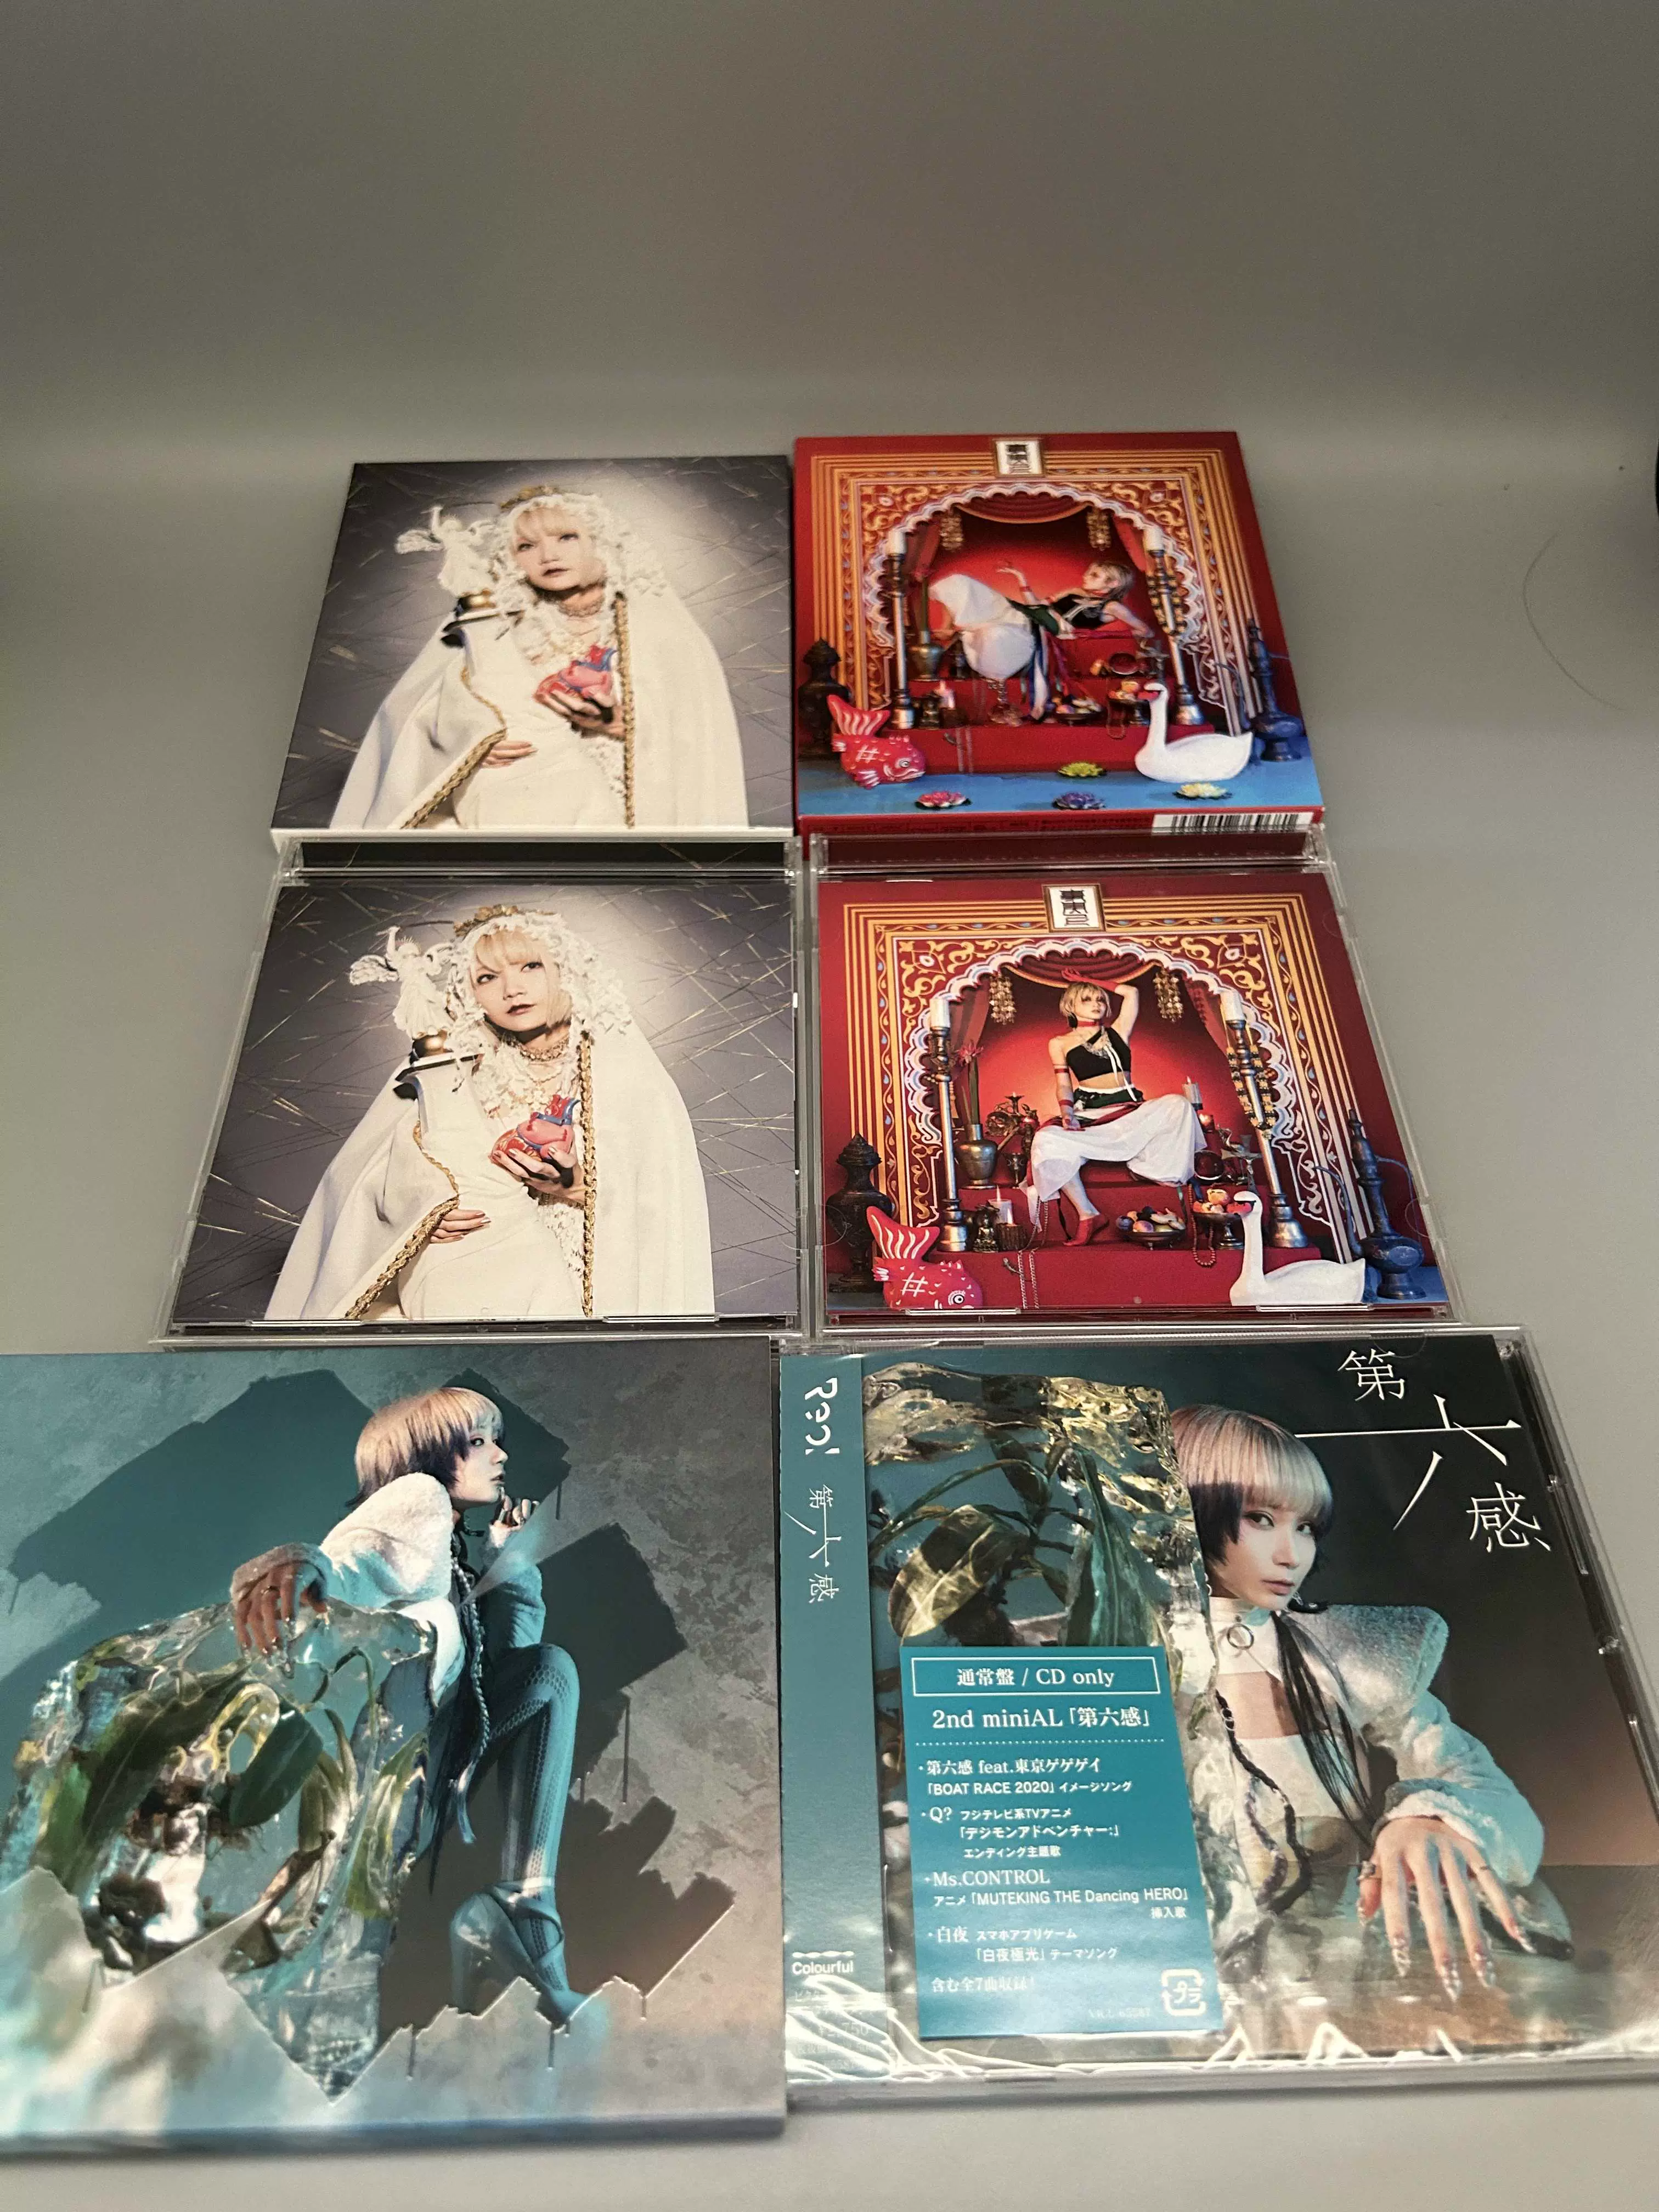 Reol Σ 西格玛文明EP 第六感No title 初回限定金字塔专辑CD-Taobao Vietnam